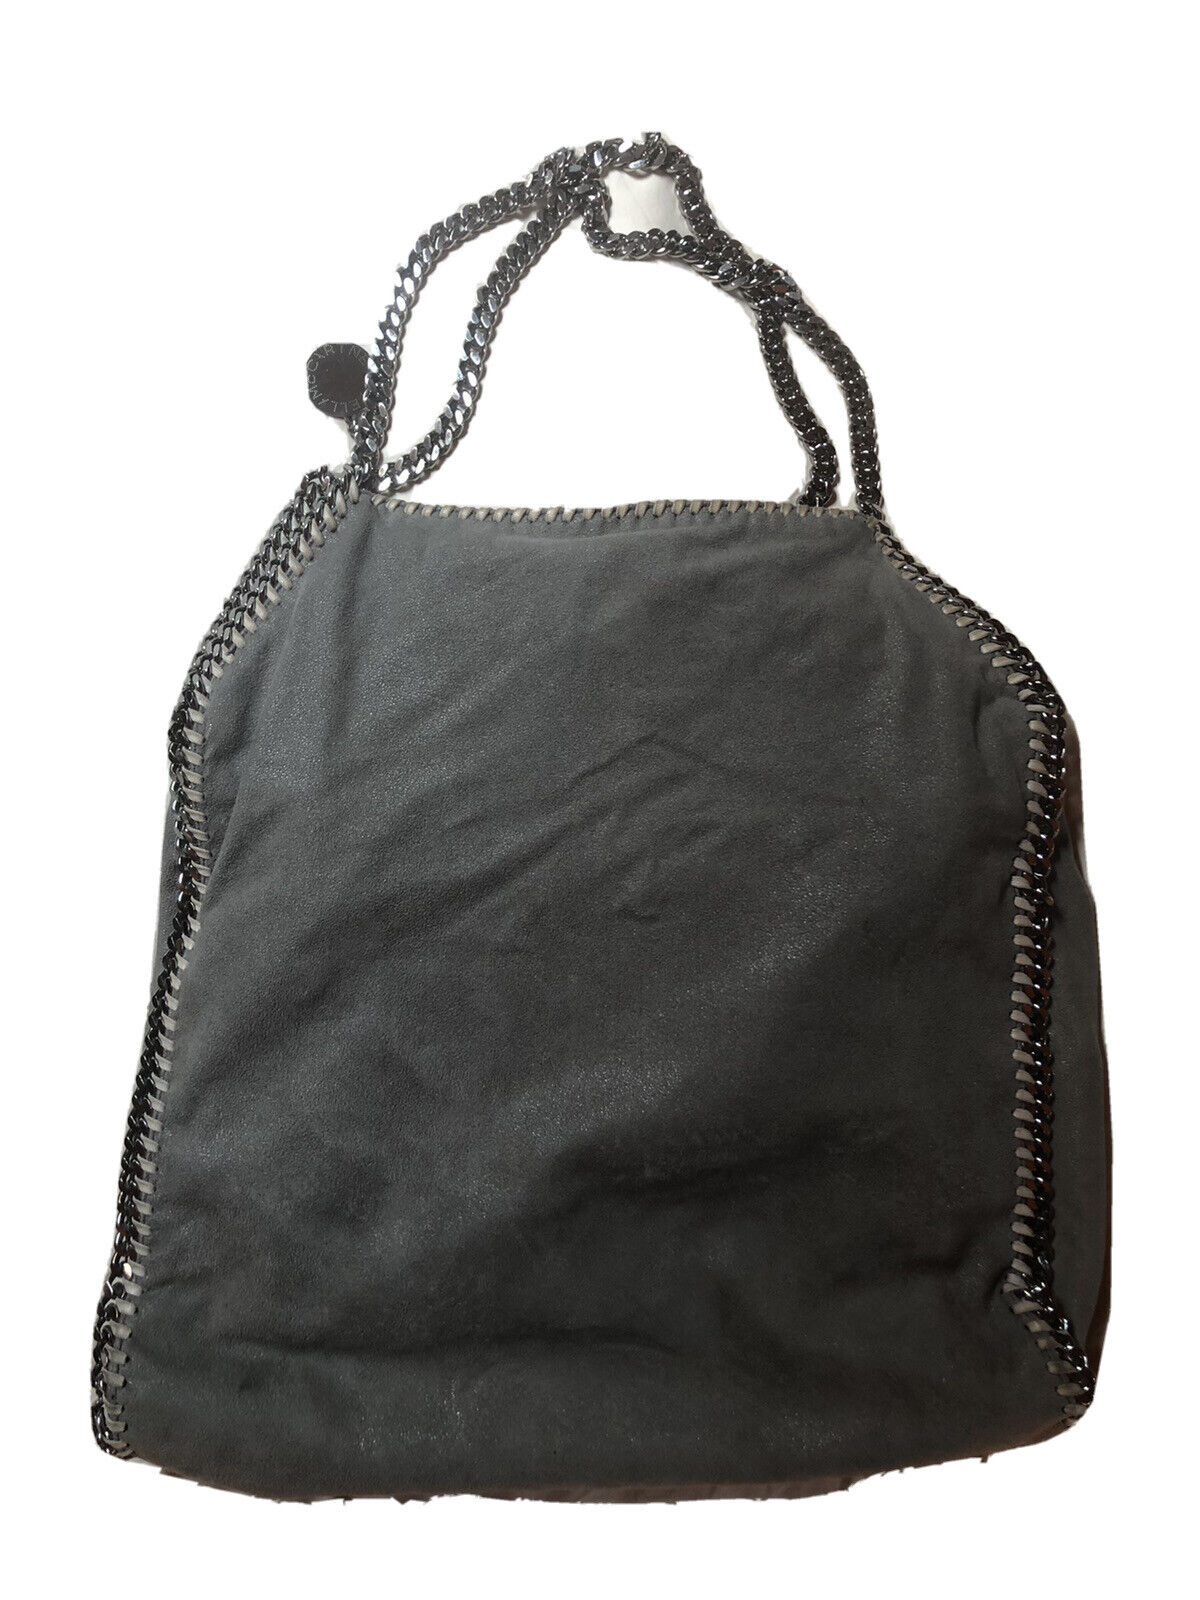 Stella McCartney Falabella Tote Bag/Borsa,100% Original with dustbag